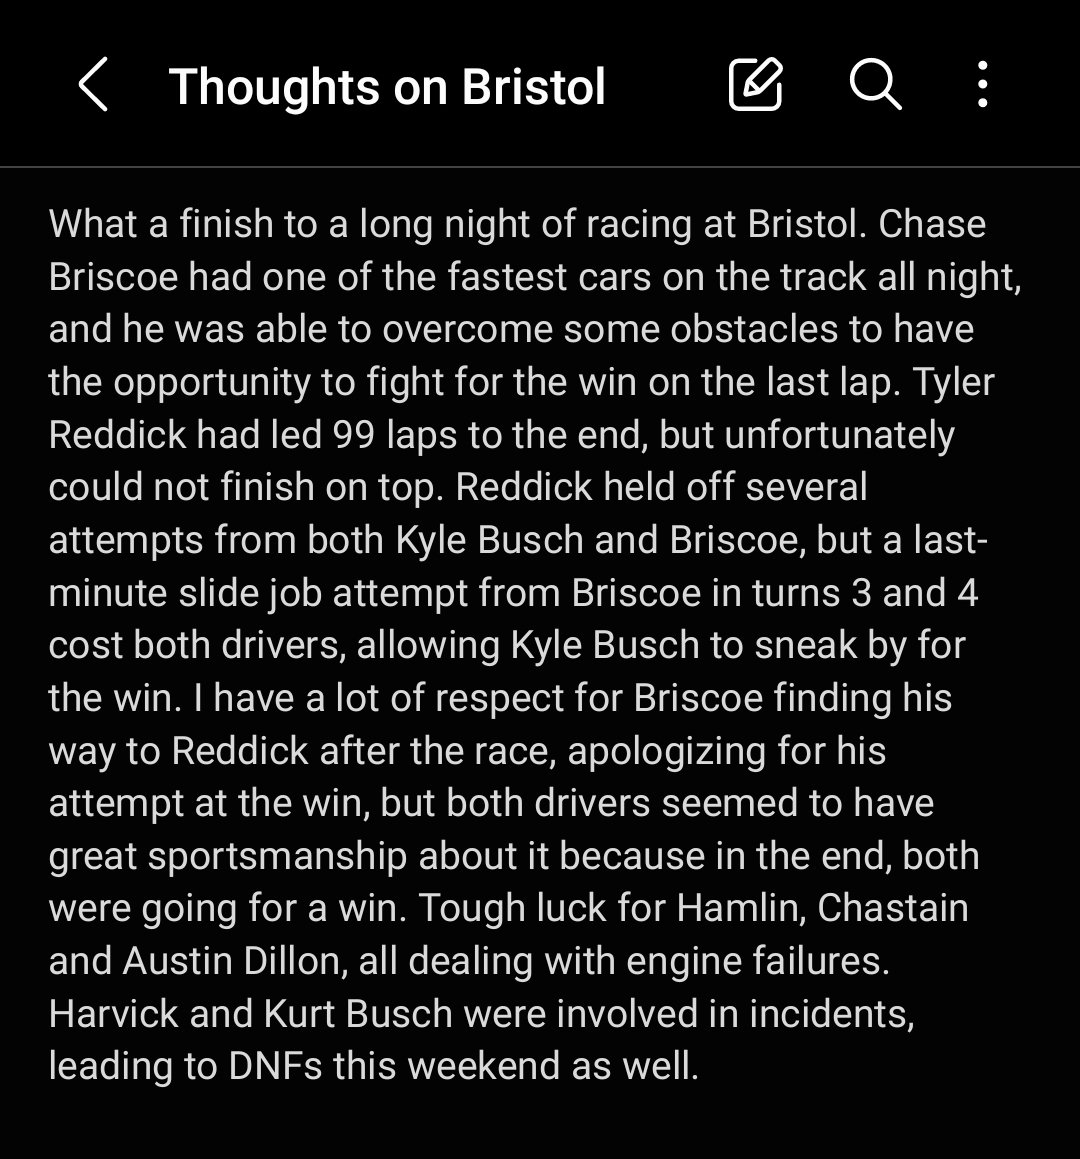 What a race tonight at Bristol. Here are a couple of my thoughts on the #BristolDirtRace from tonight
#NASCAR #NASCARonFOX #BristolMotorSpeedway #BristolDirt #CrazyFinish #Briscoe #Reddick #CrazyEnding https://t.co/zanbNzRESP